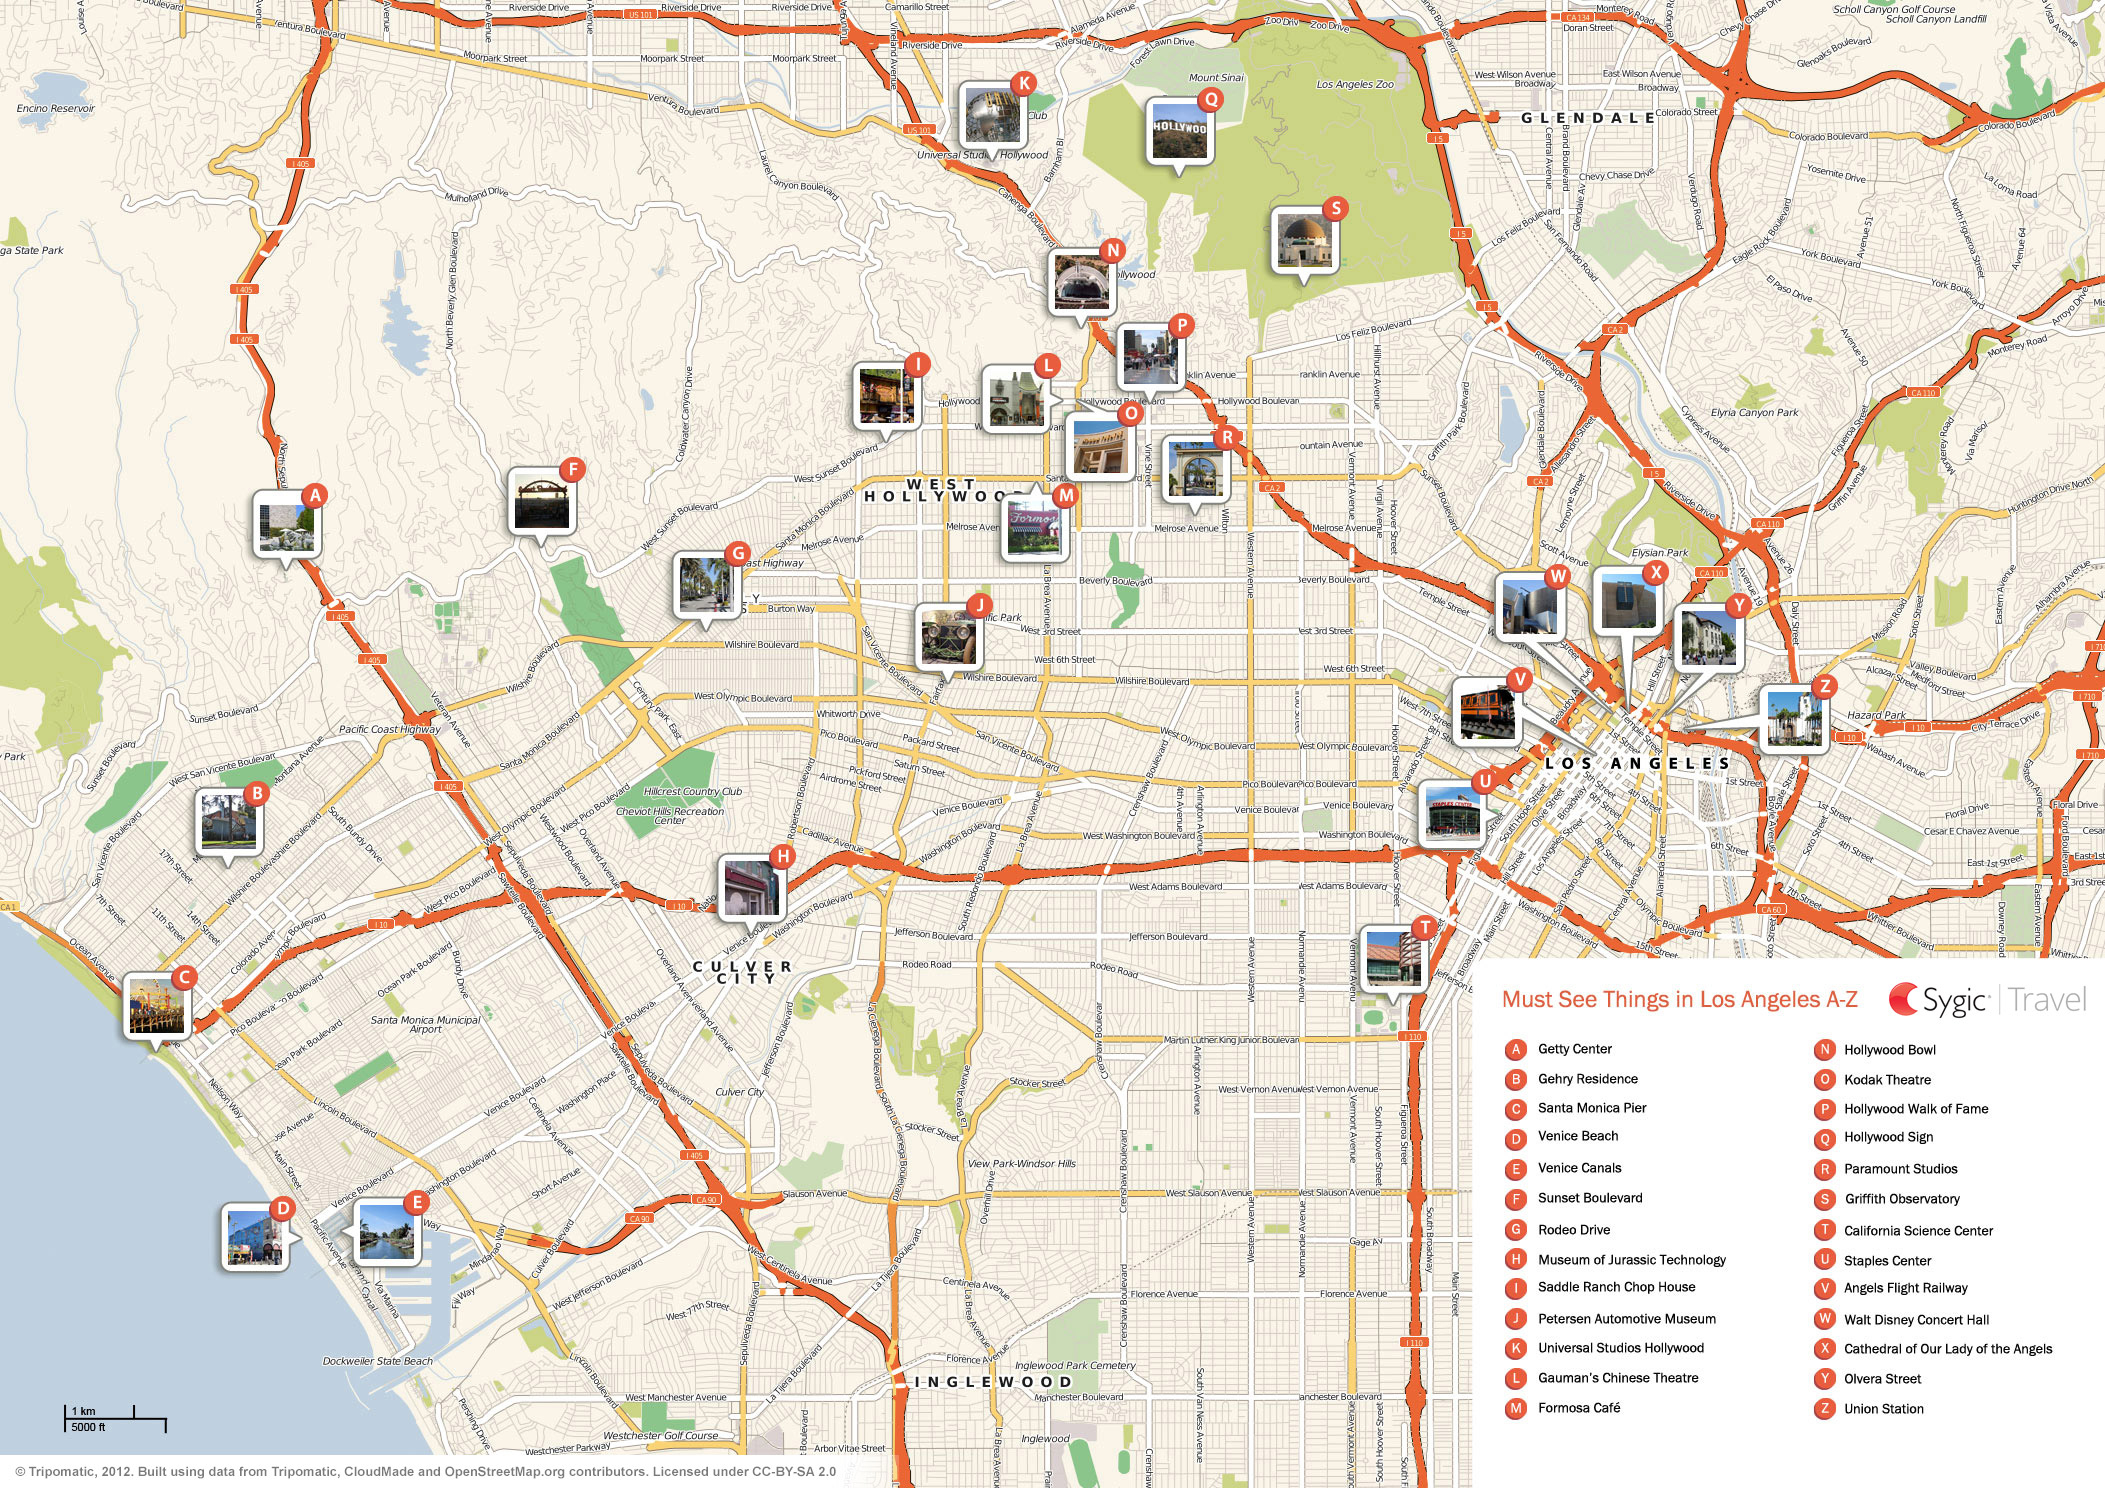 Los Angeles Printable Tourist Map | Sygic Travel - Los Angeles Tourist Map Printable